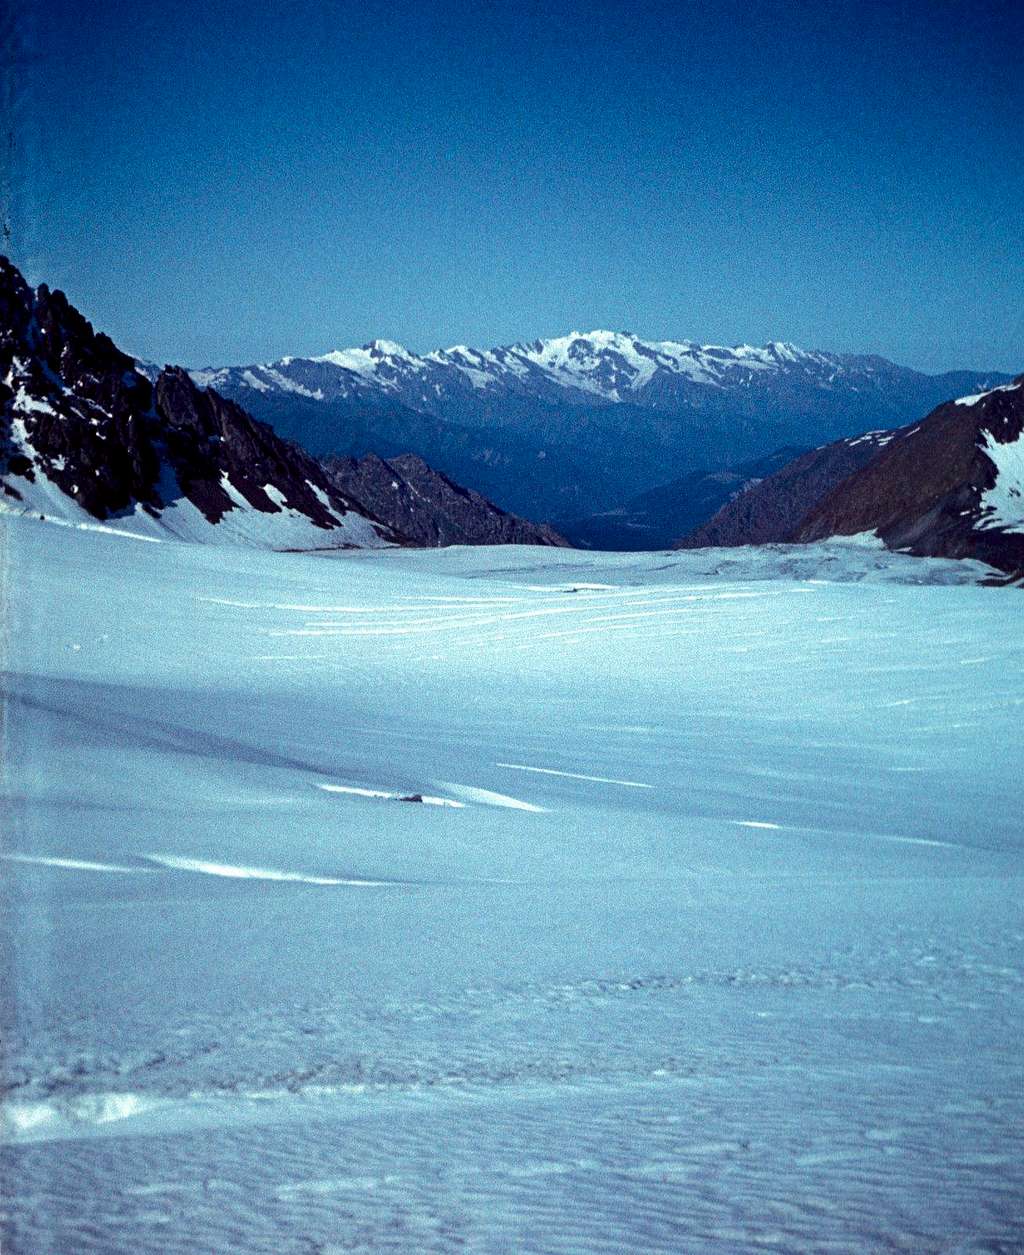 Svanetian Range